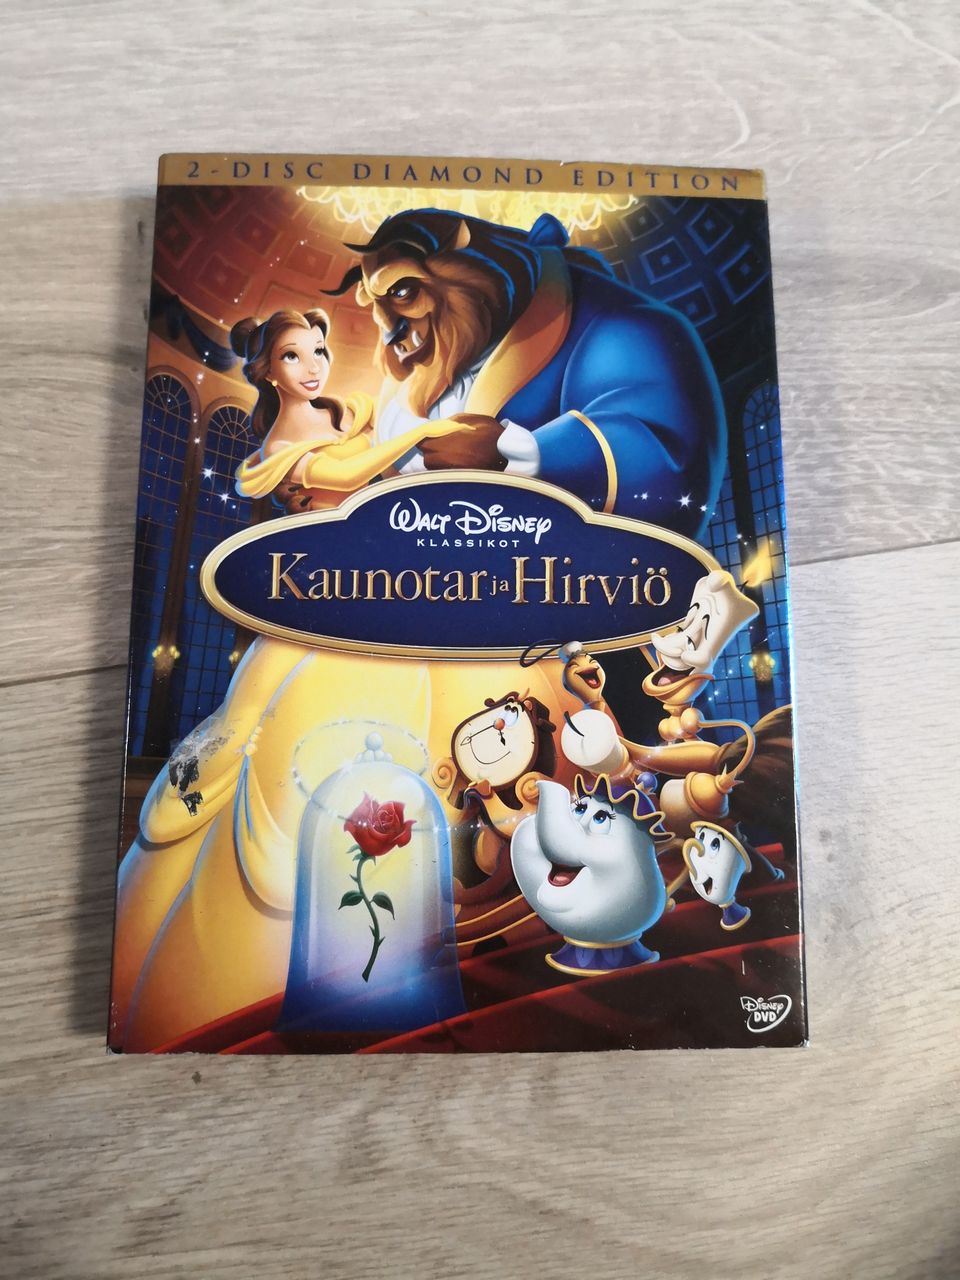 Disneyn Kaunotar ja Hirviö 2-disc Diamond edition DVD